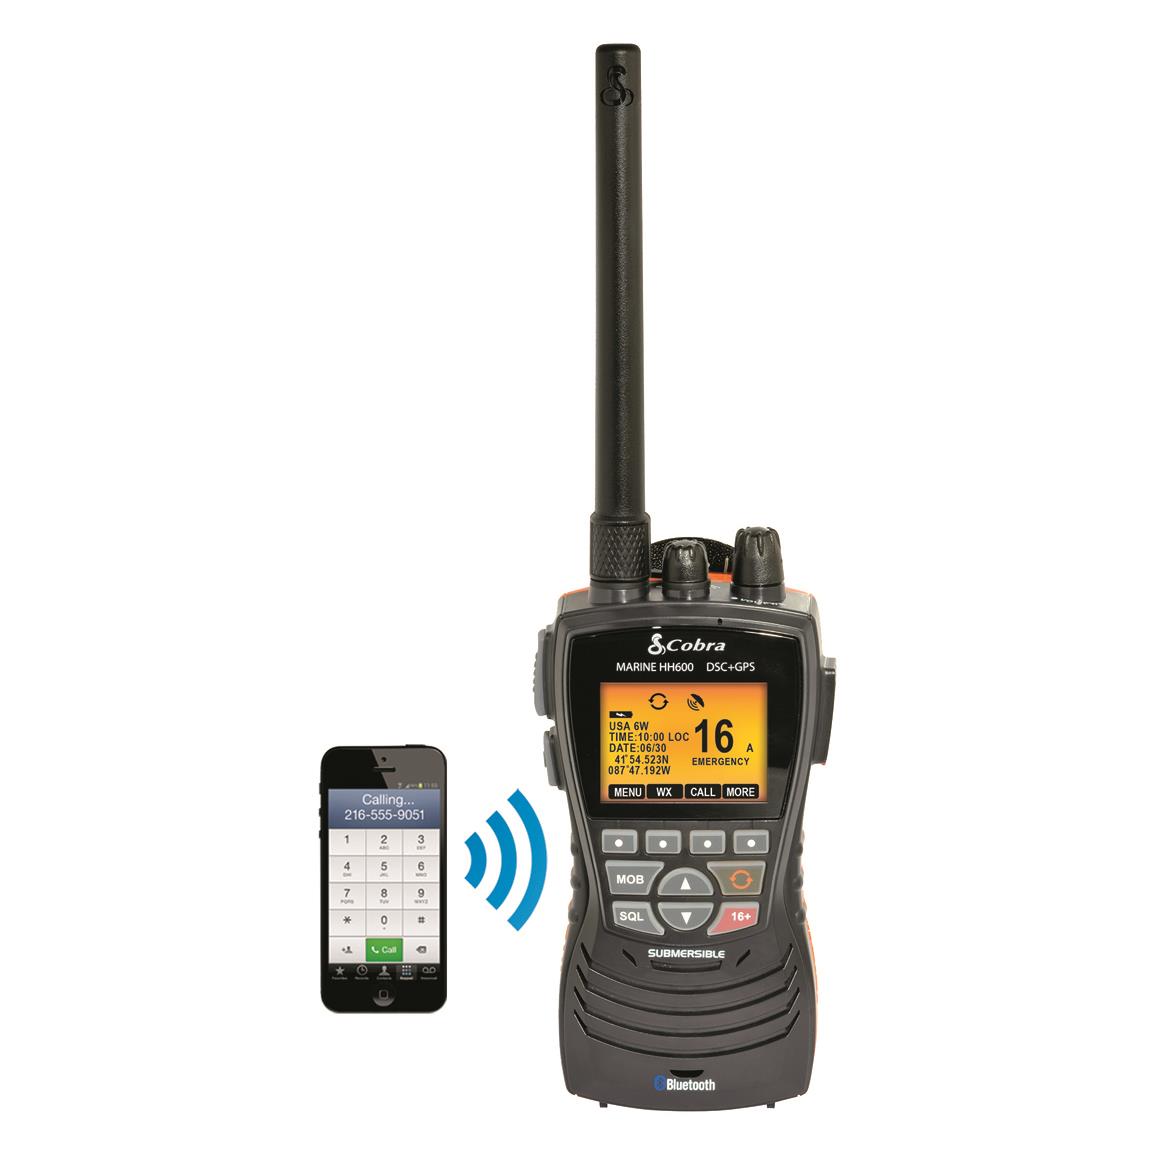 Cobra Floating Handheld VHF Radio with Bluetooth and GPS